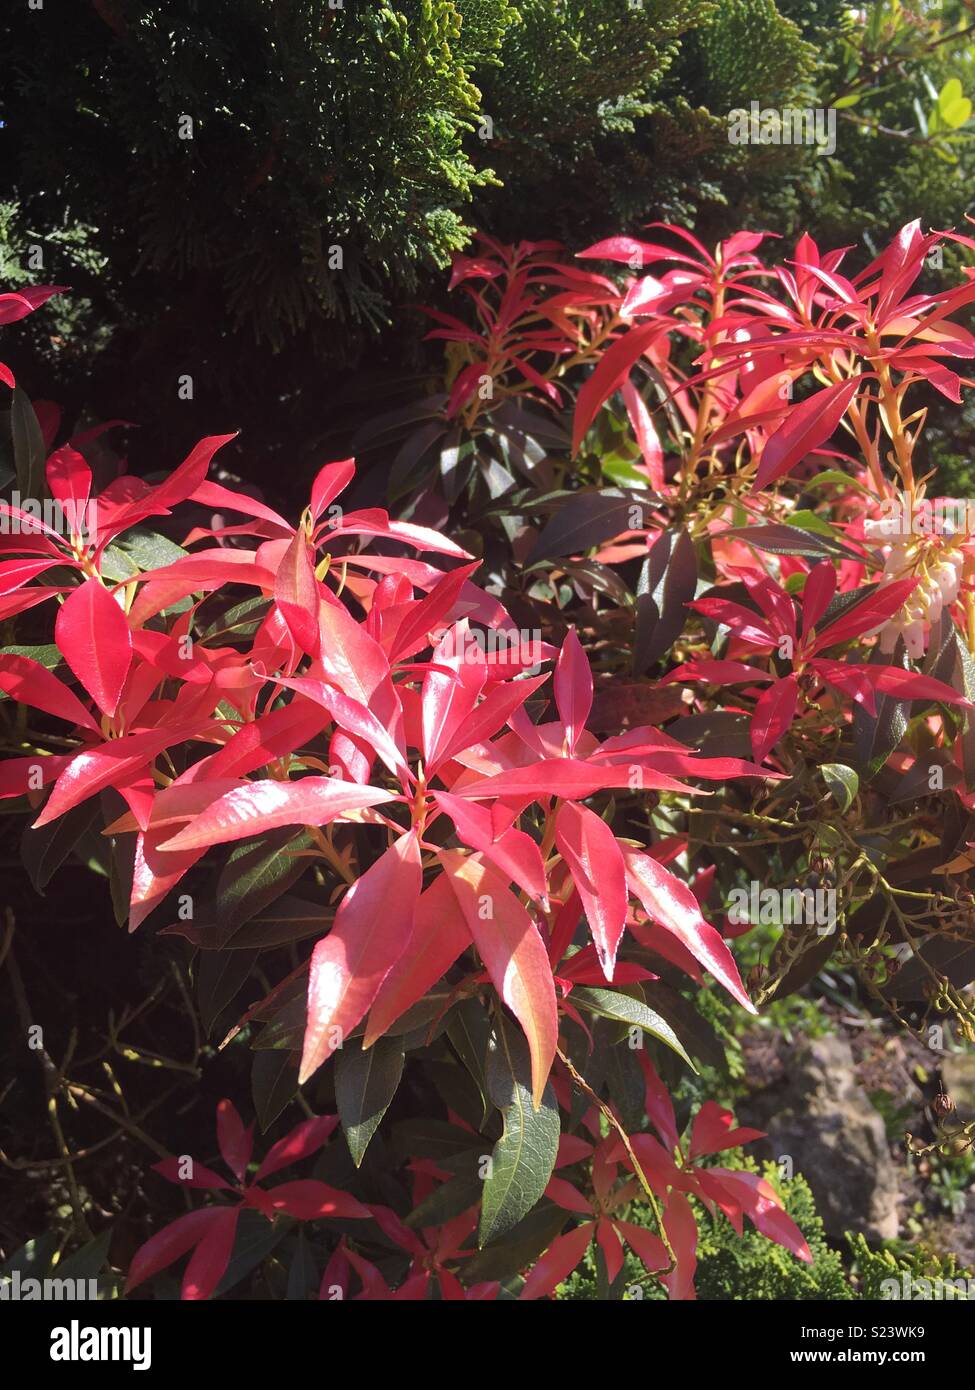 Red leaves of a pieris shrub Stock Photo